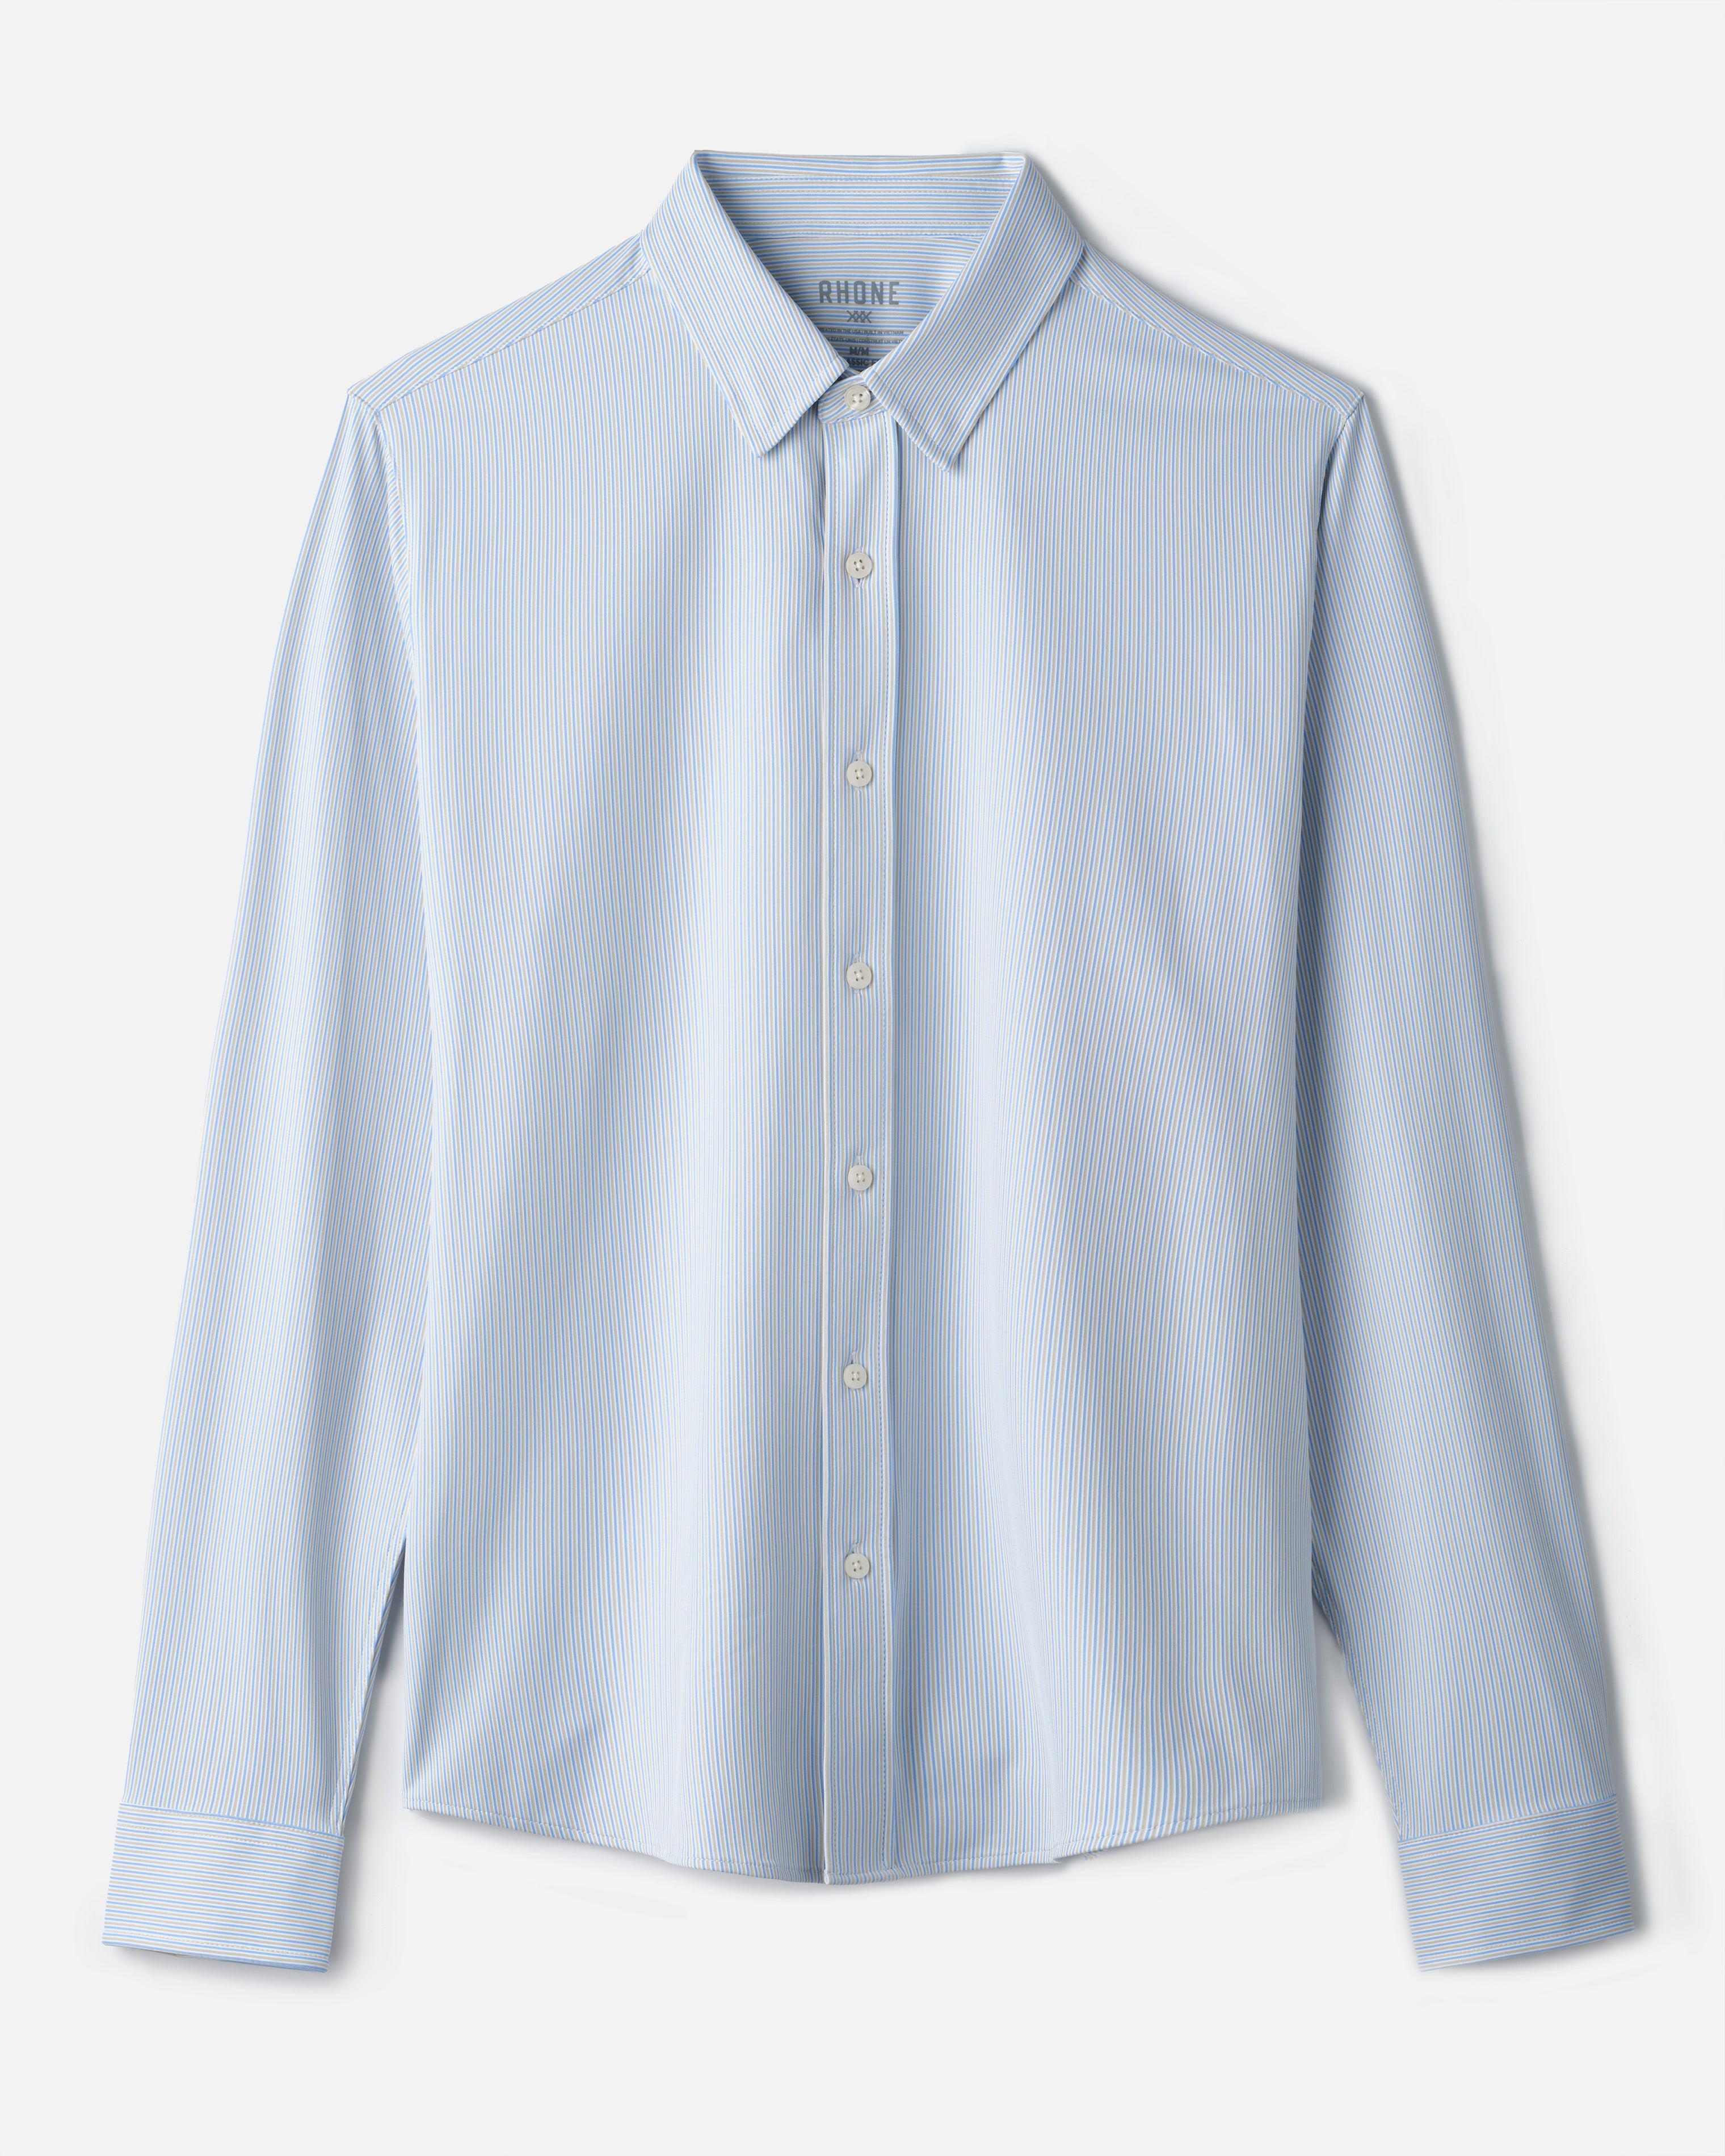 Calvin Klein Slim Fit Dress Shirt | Men's Shirts | Moores Clothing